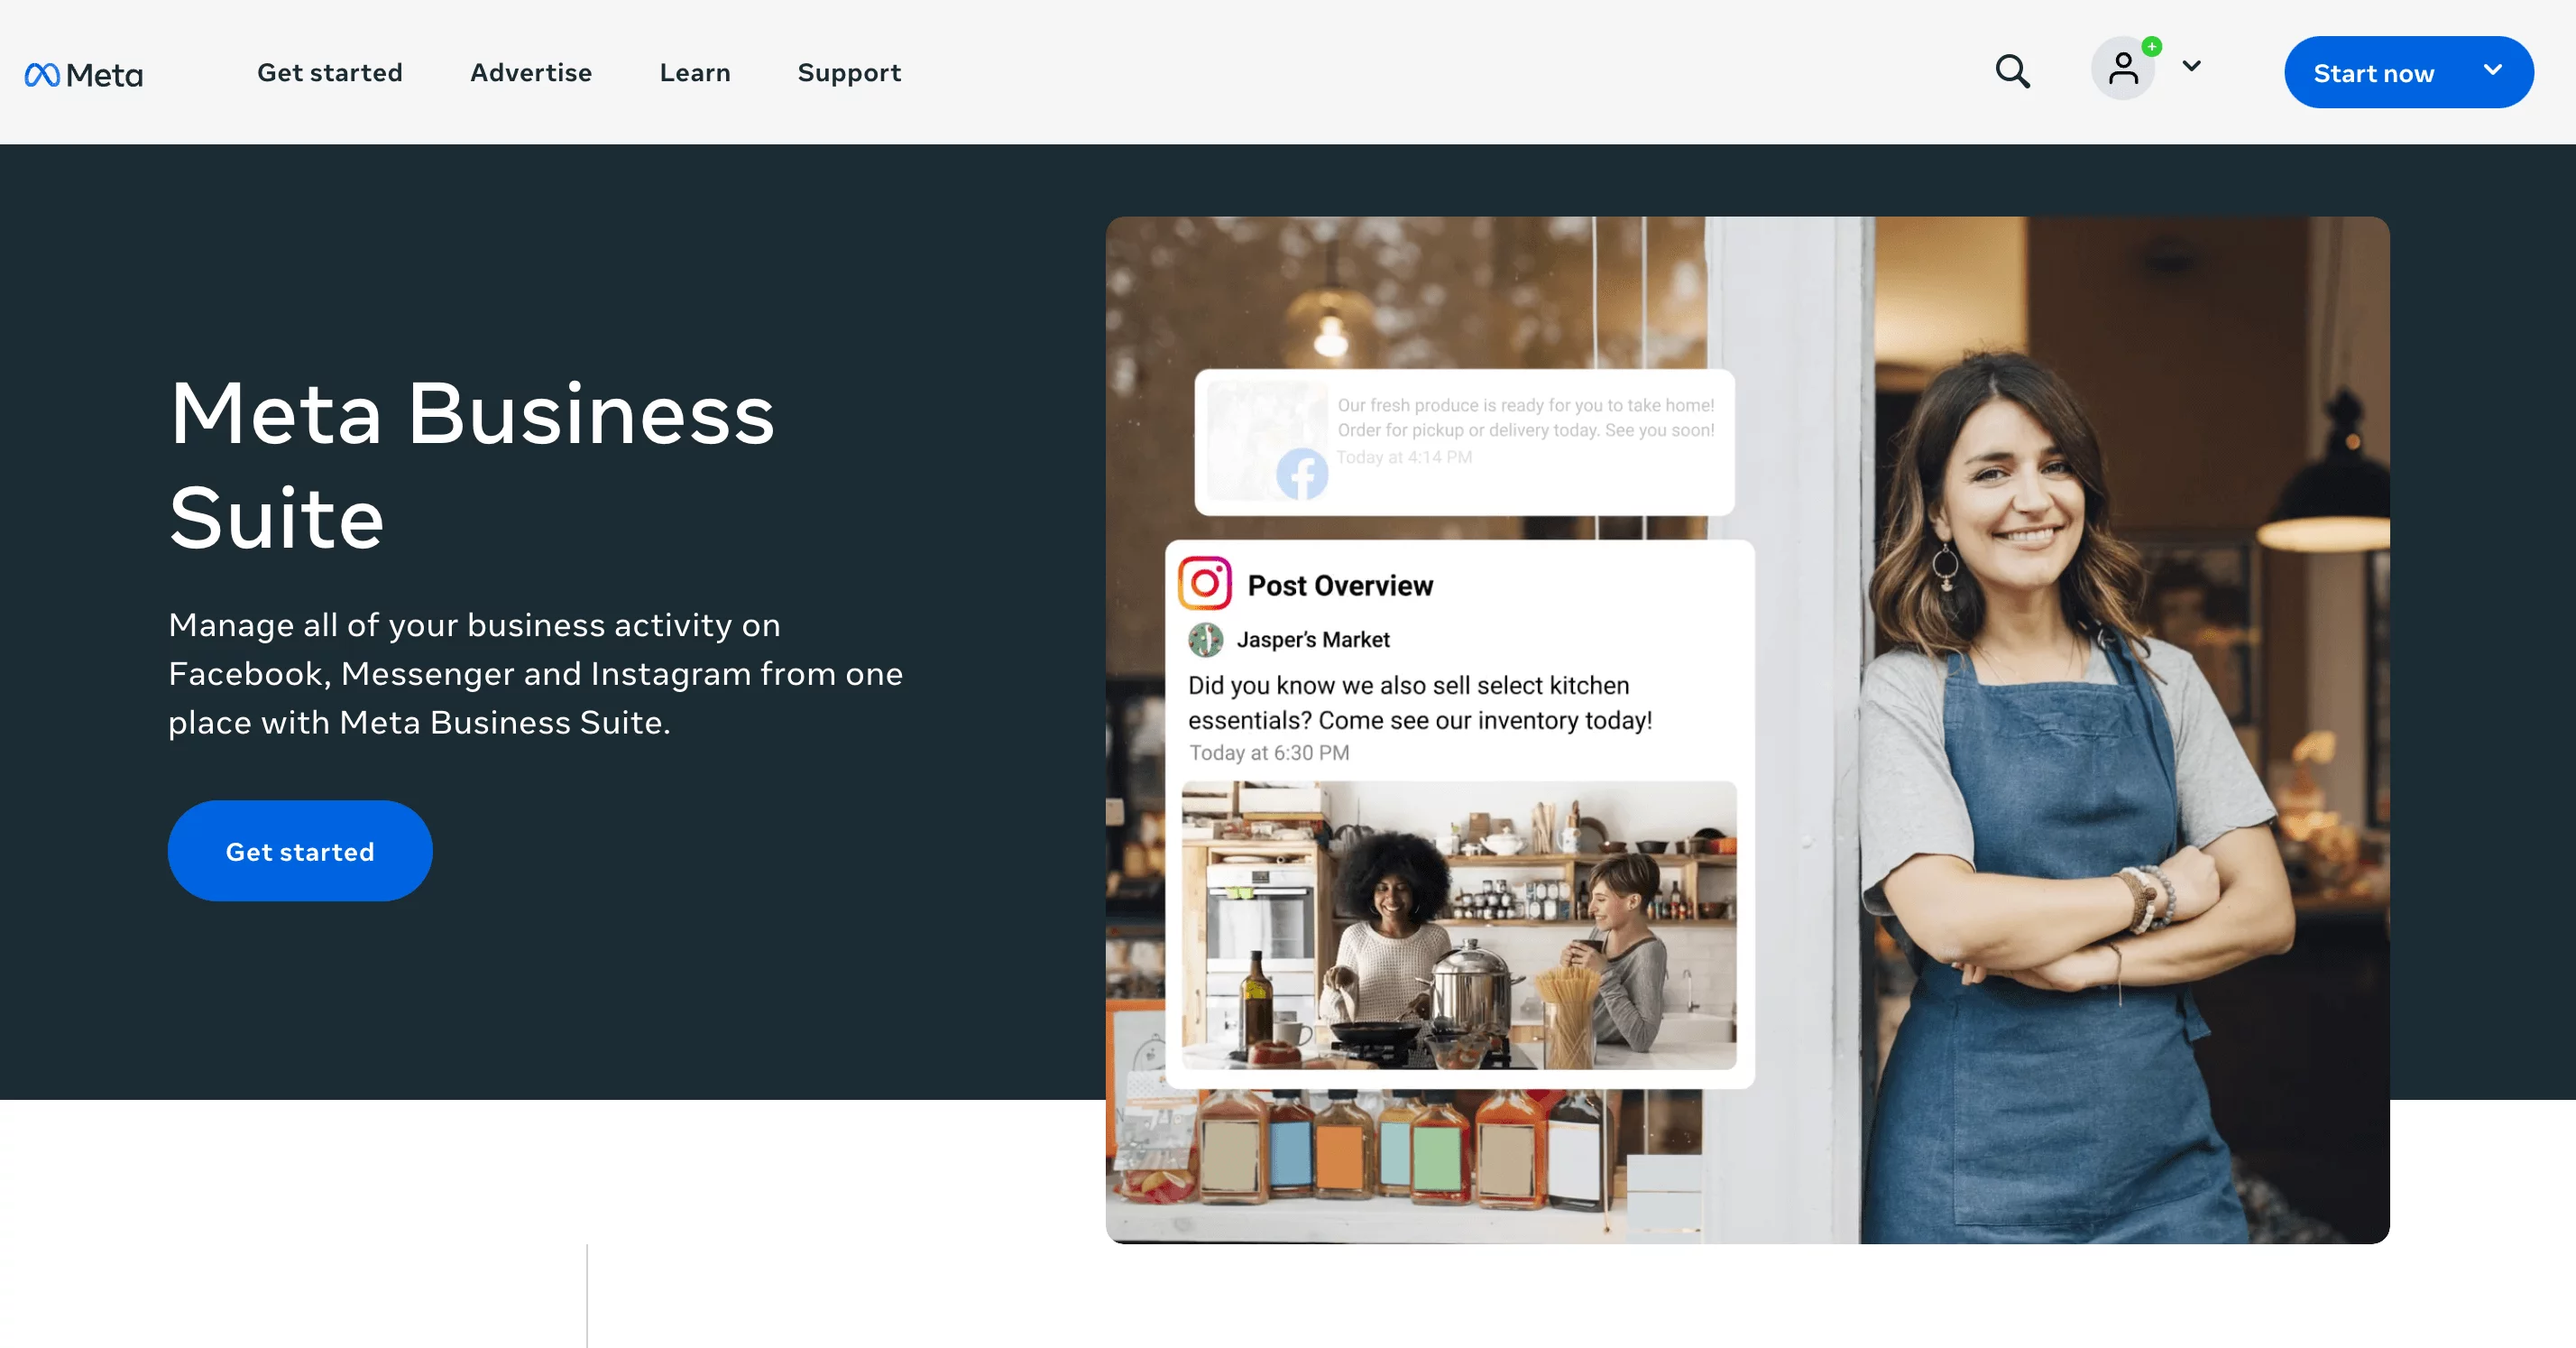  Meta Business Suite homepage showcasing comprehensive social media management tools